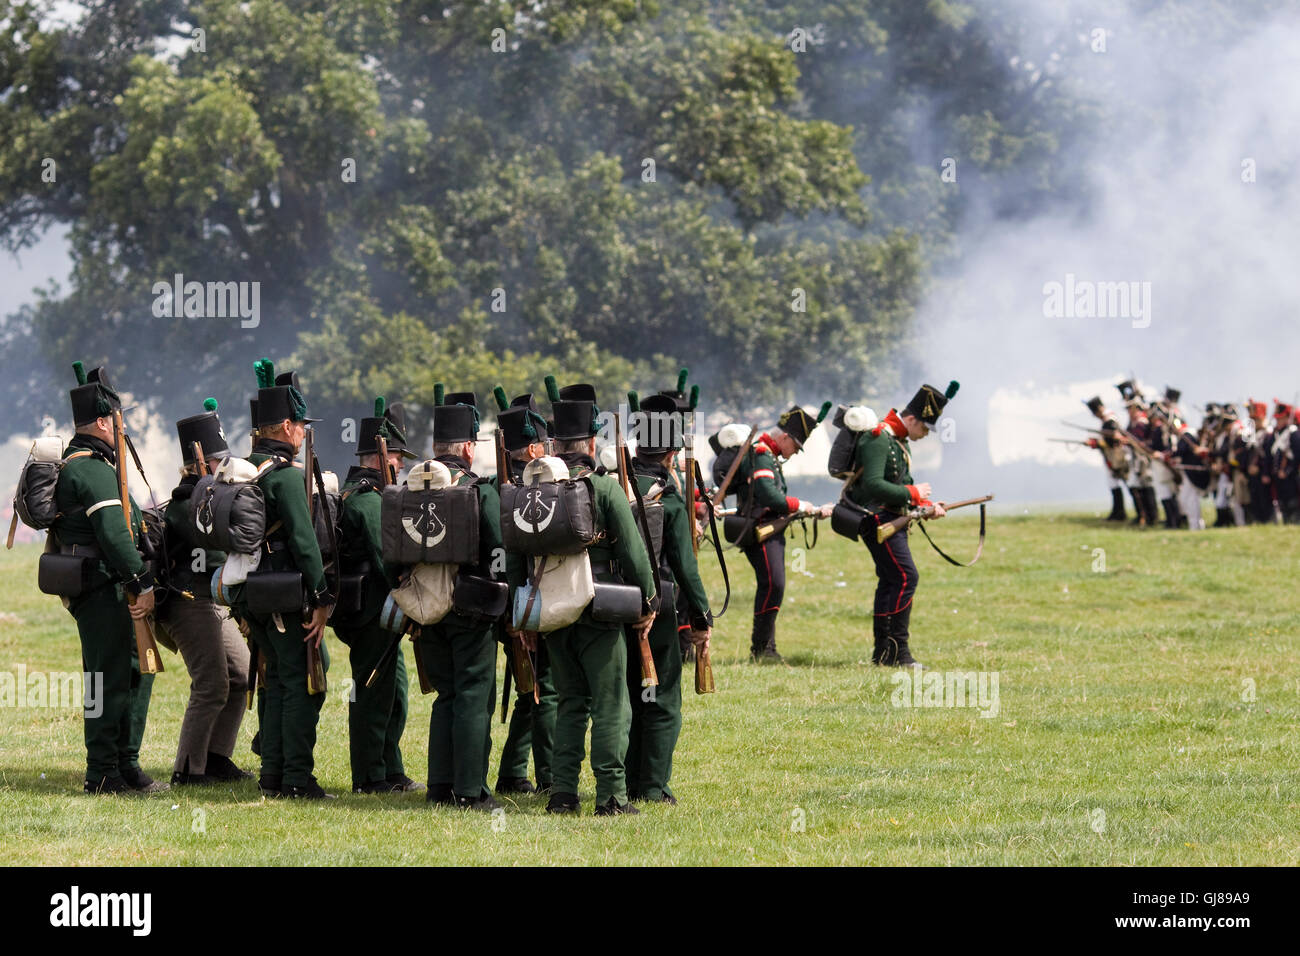 reenactment of the Napoleonic wars, 95th Rifles on the battlefield Stock Photo